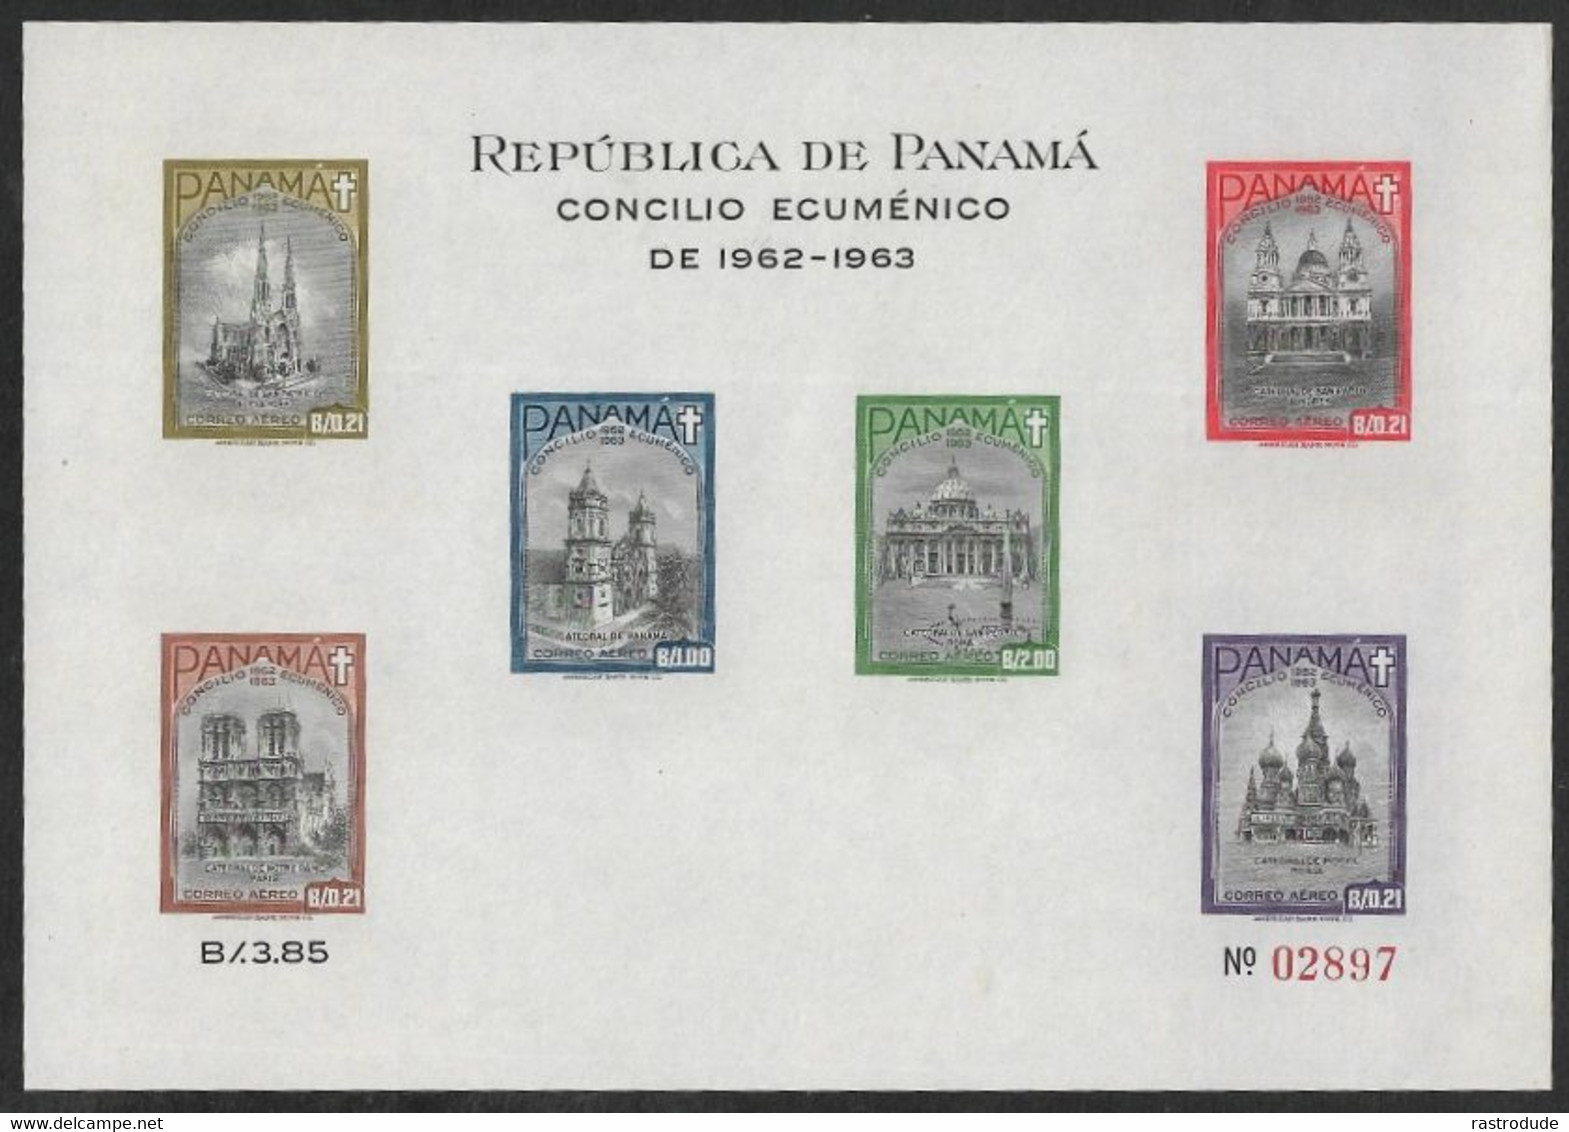 1964 PANAMA - MINIATURE SHEET (Mi Bl.16), ERROR, VATICAN GOTHIC ARCHITECTURE, CATHEDRAL, AMERICAN BANK NOTE, - Panama